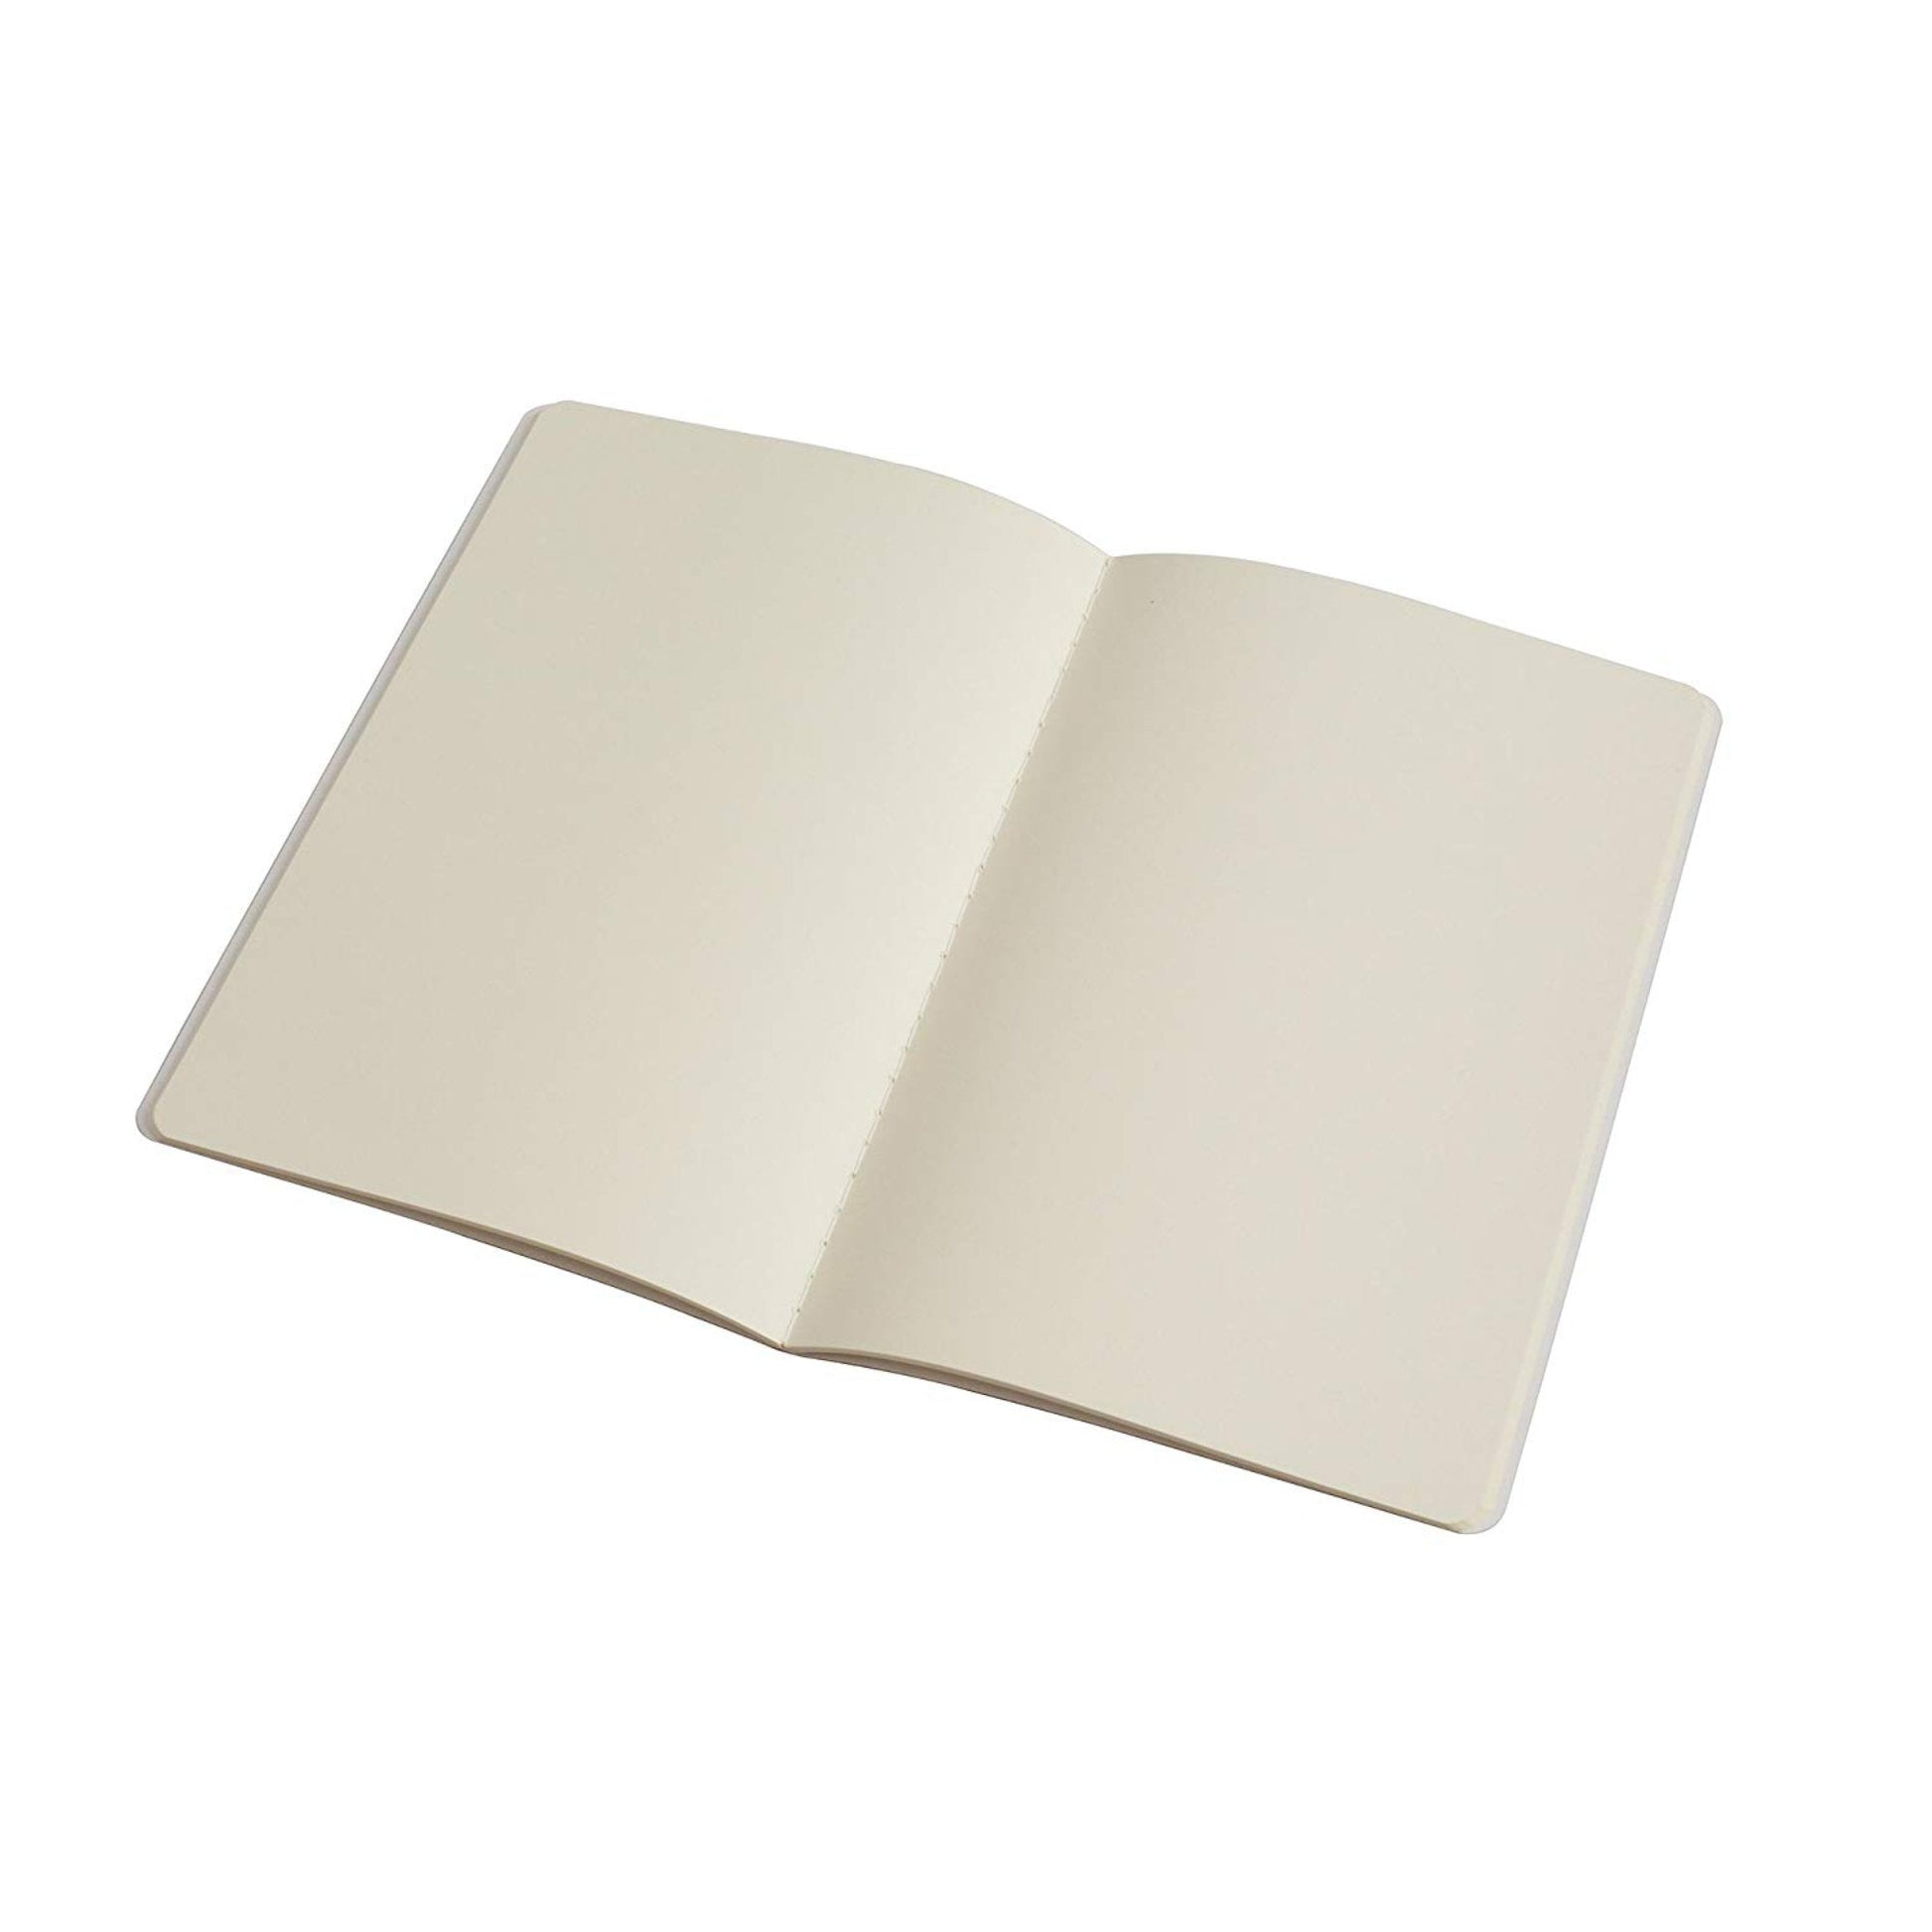 PinkPolish Design Notebook "Floral Repetition" Tessellation Inspired Notebook / Sketchbook / Journal